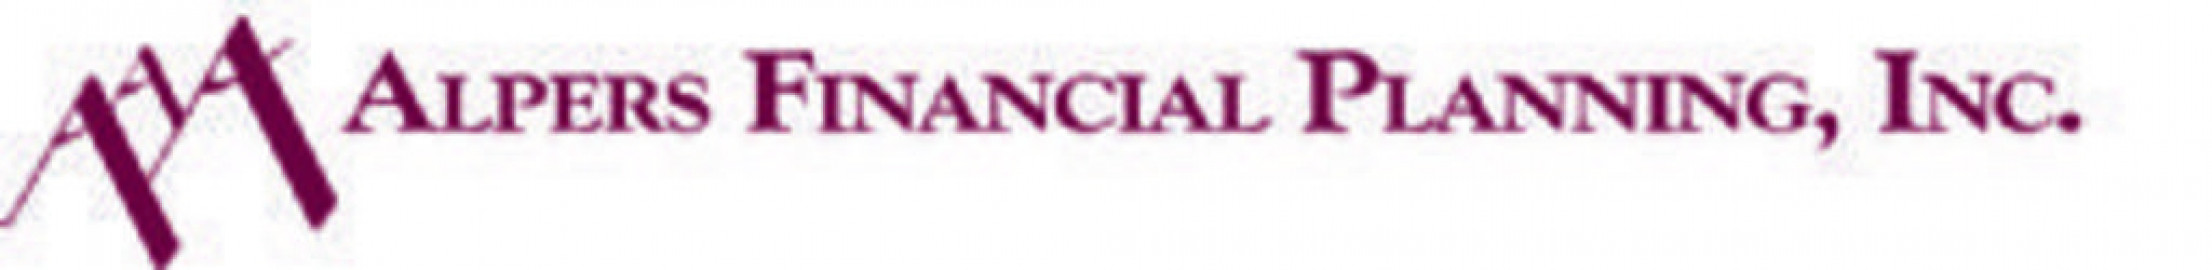 Visit Alpers Financial Planning, Inc.